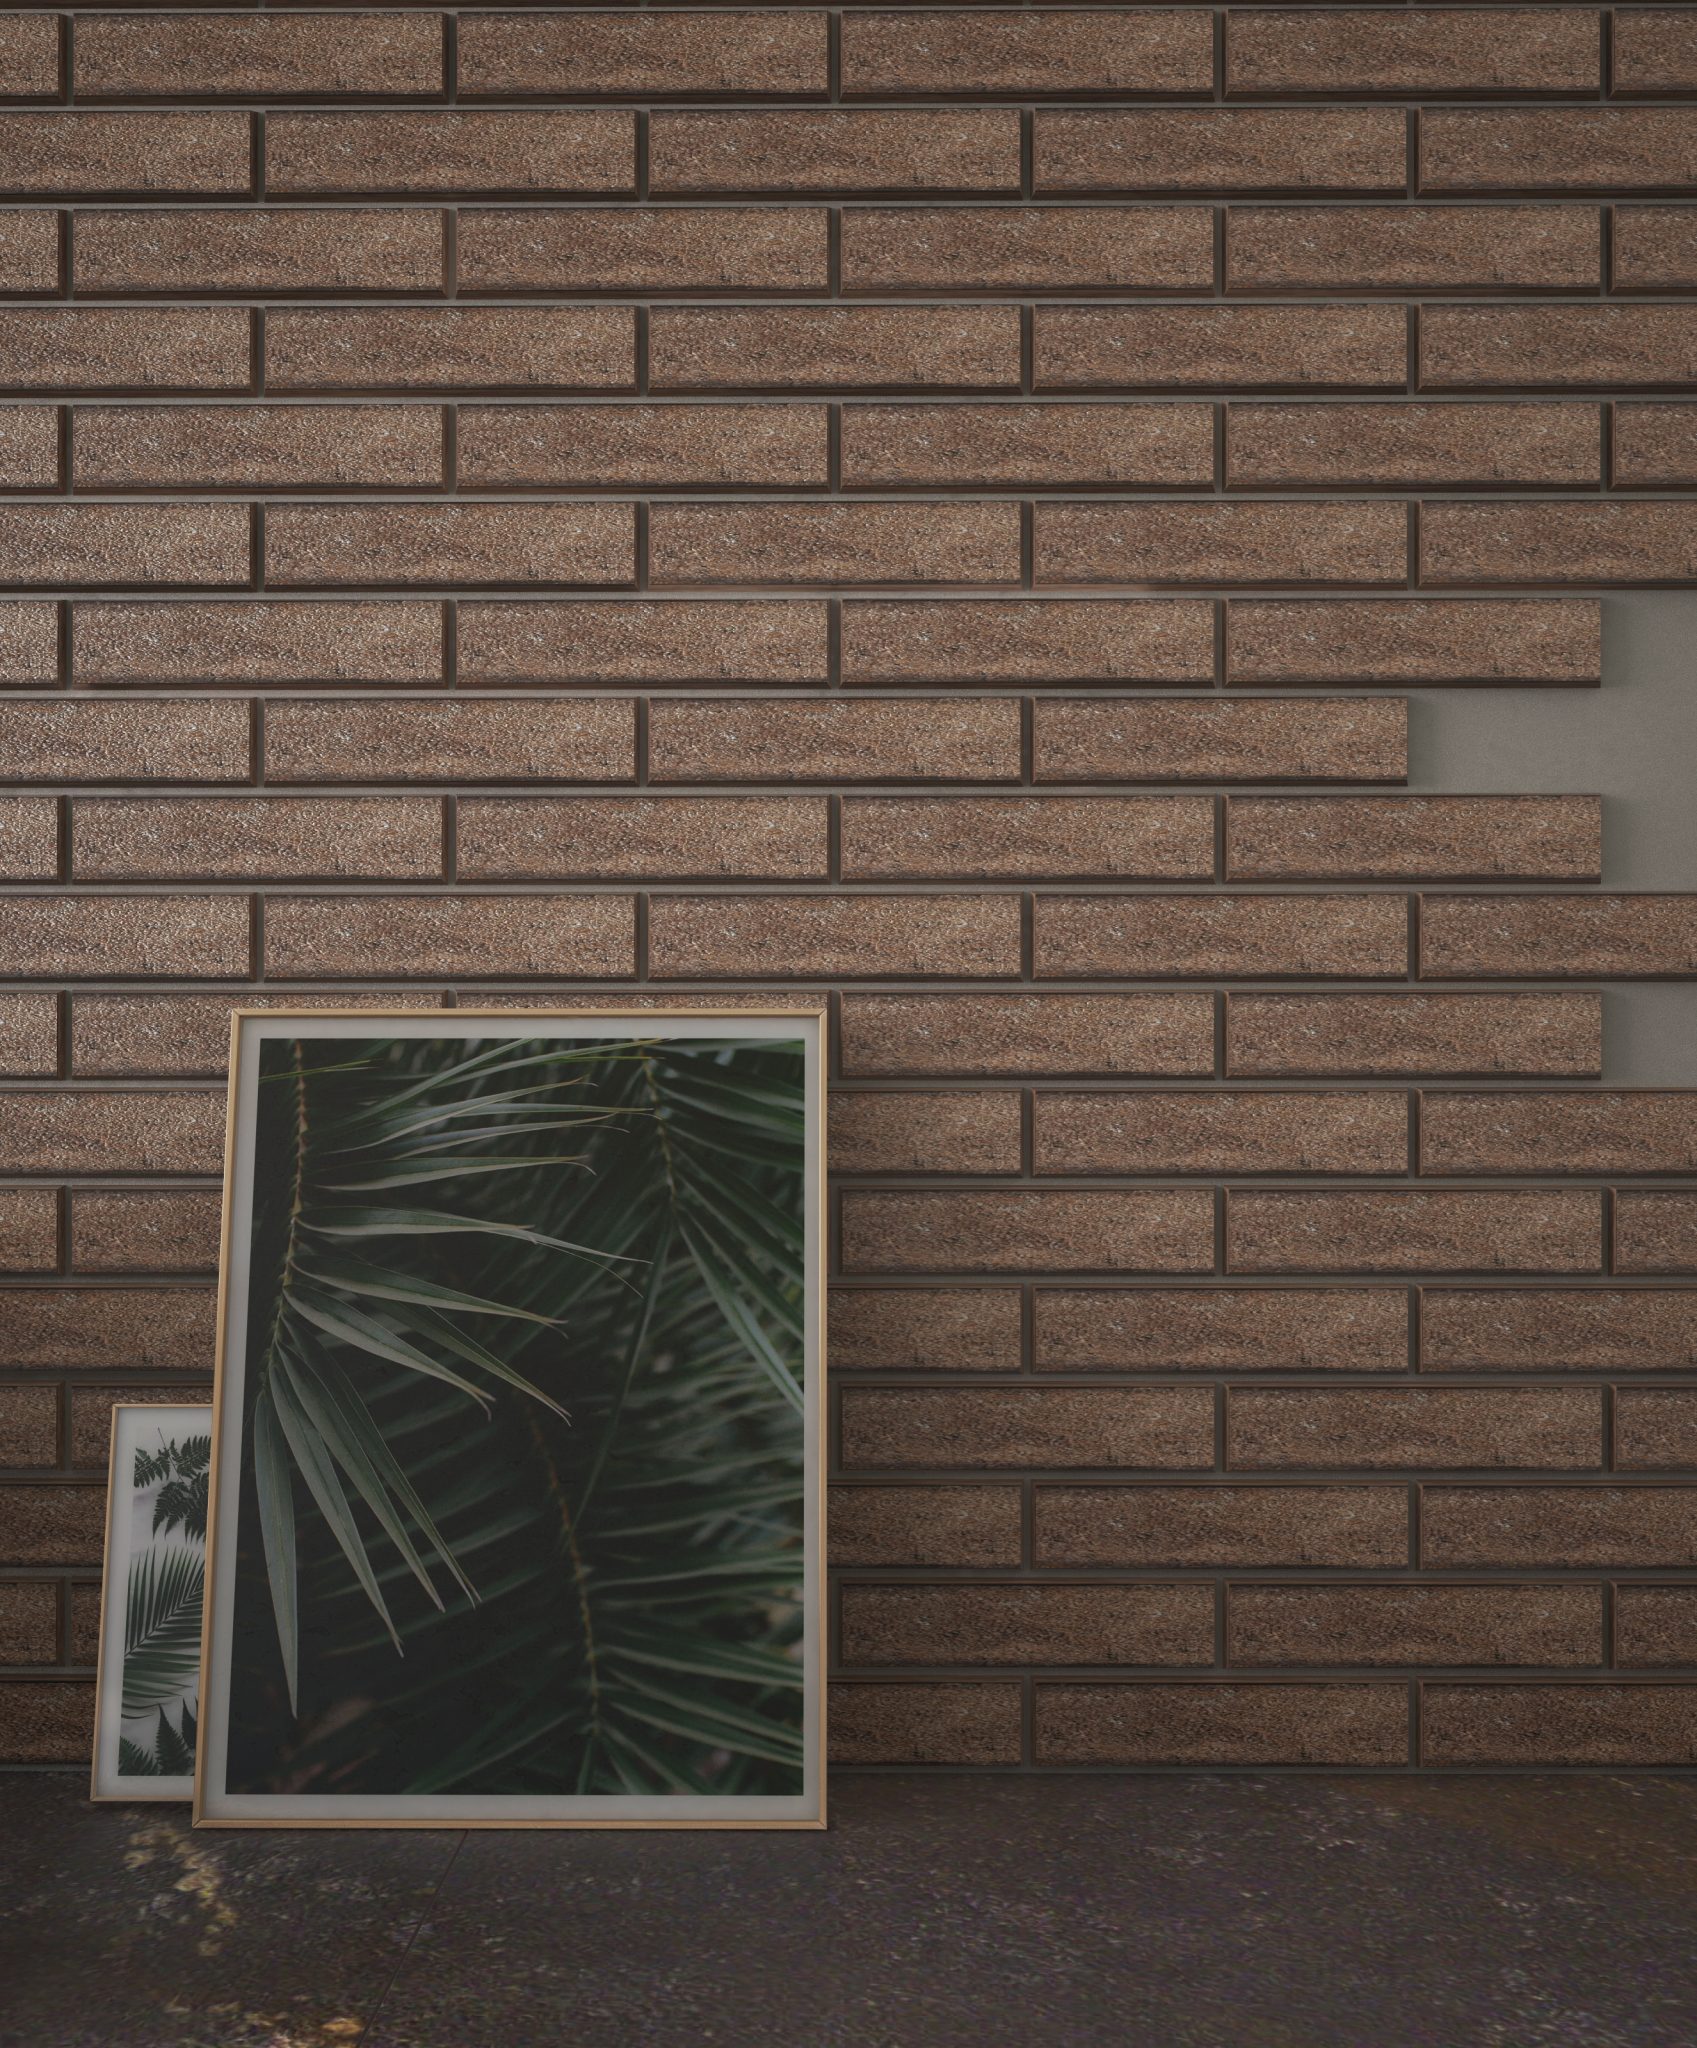 Плитка Terracotta Bricks, галерея фото в интерьерах